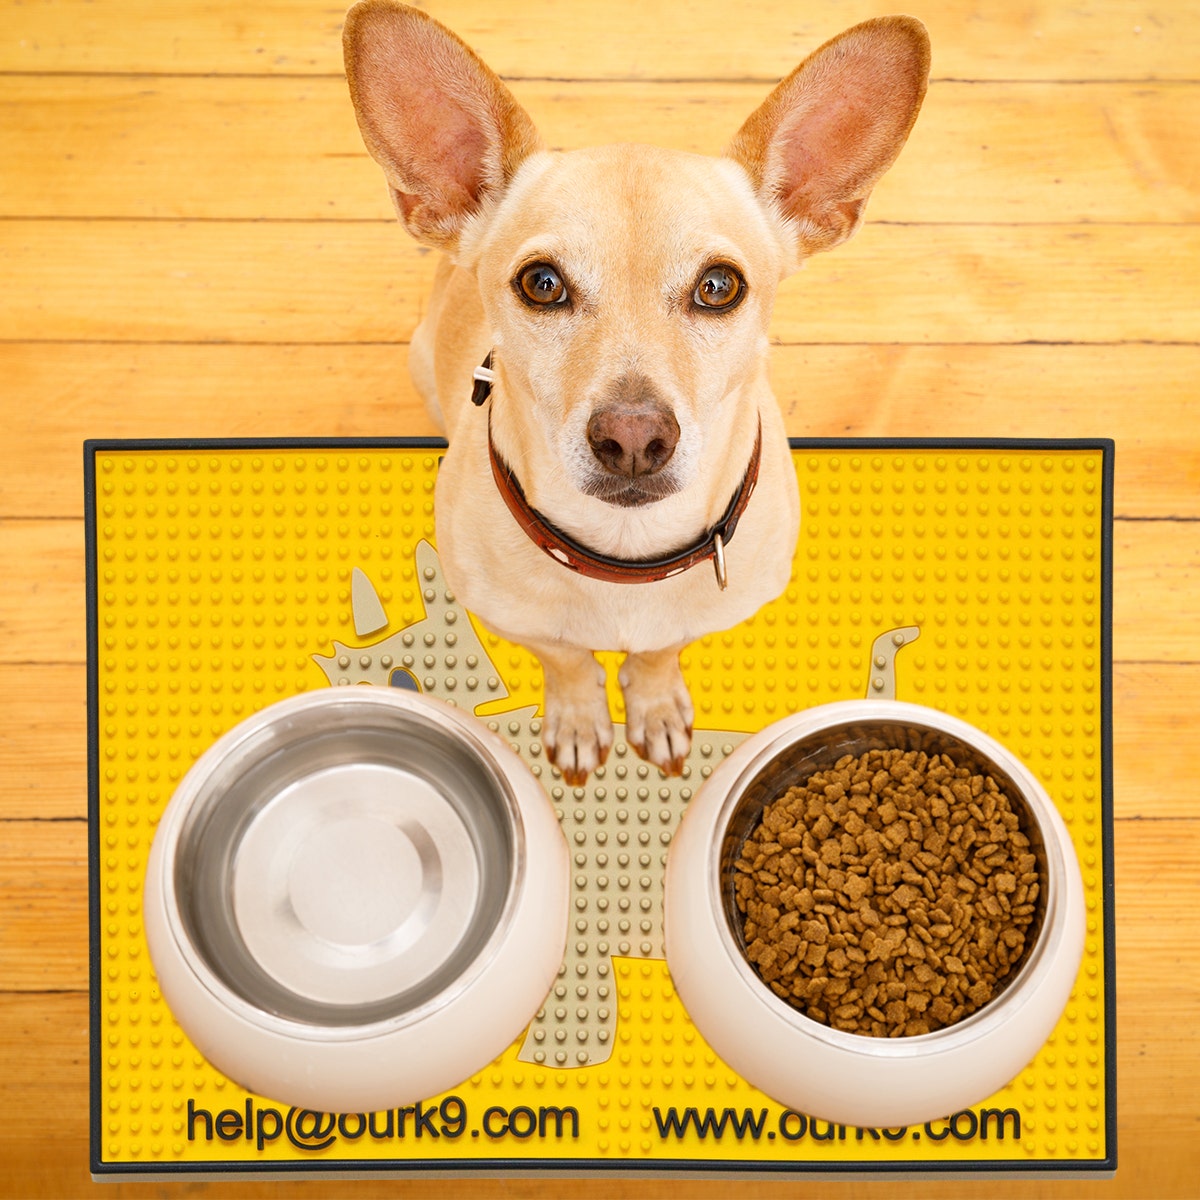 Round Pet Slow Feeder Mat Dog Licking Mat Washable Dog Food Plate